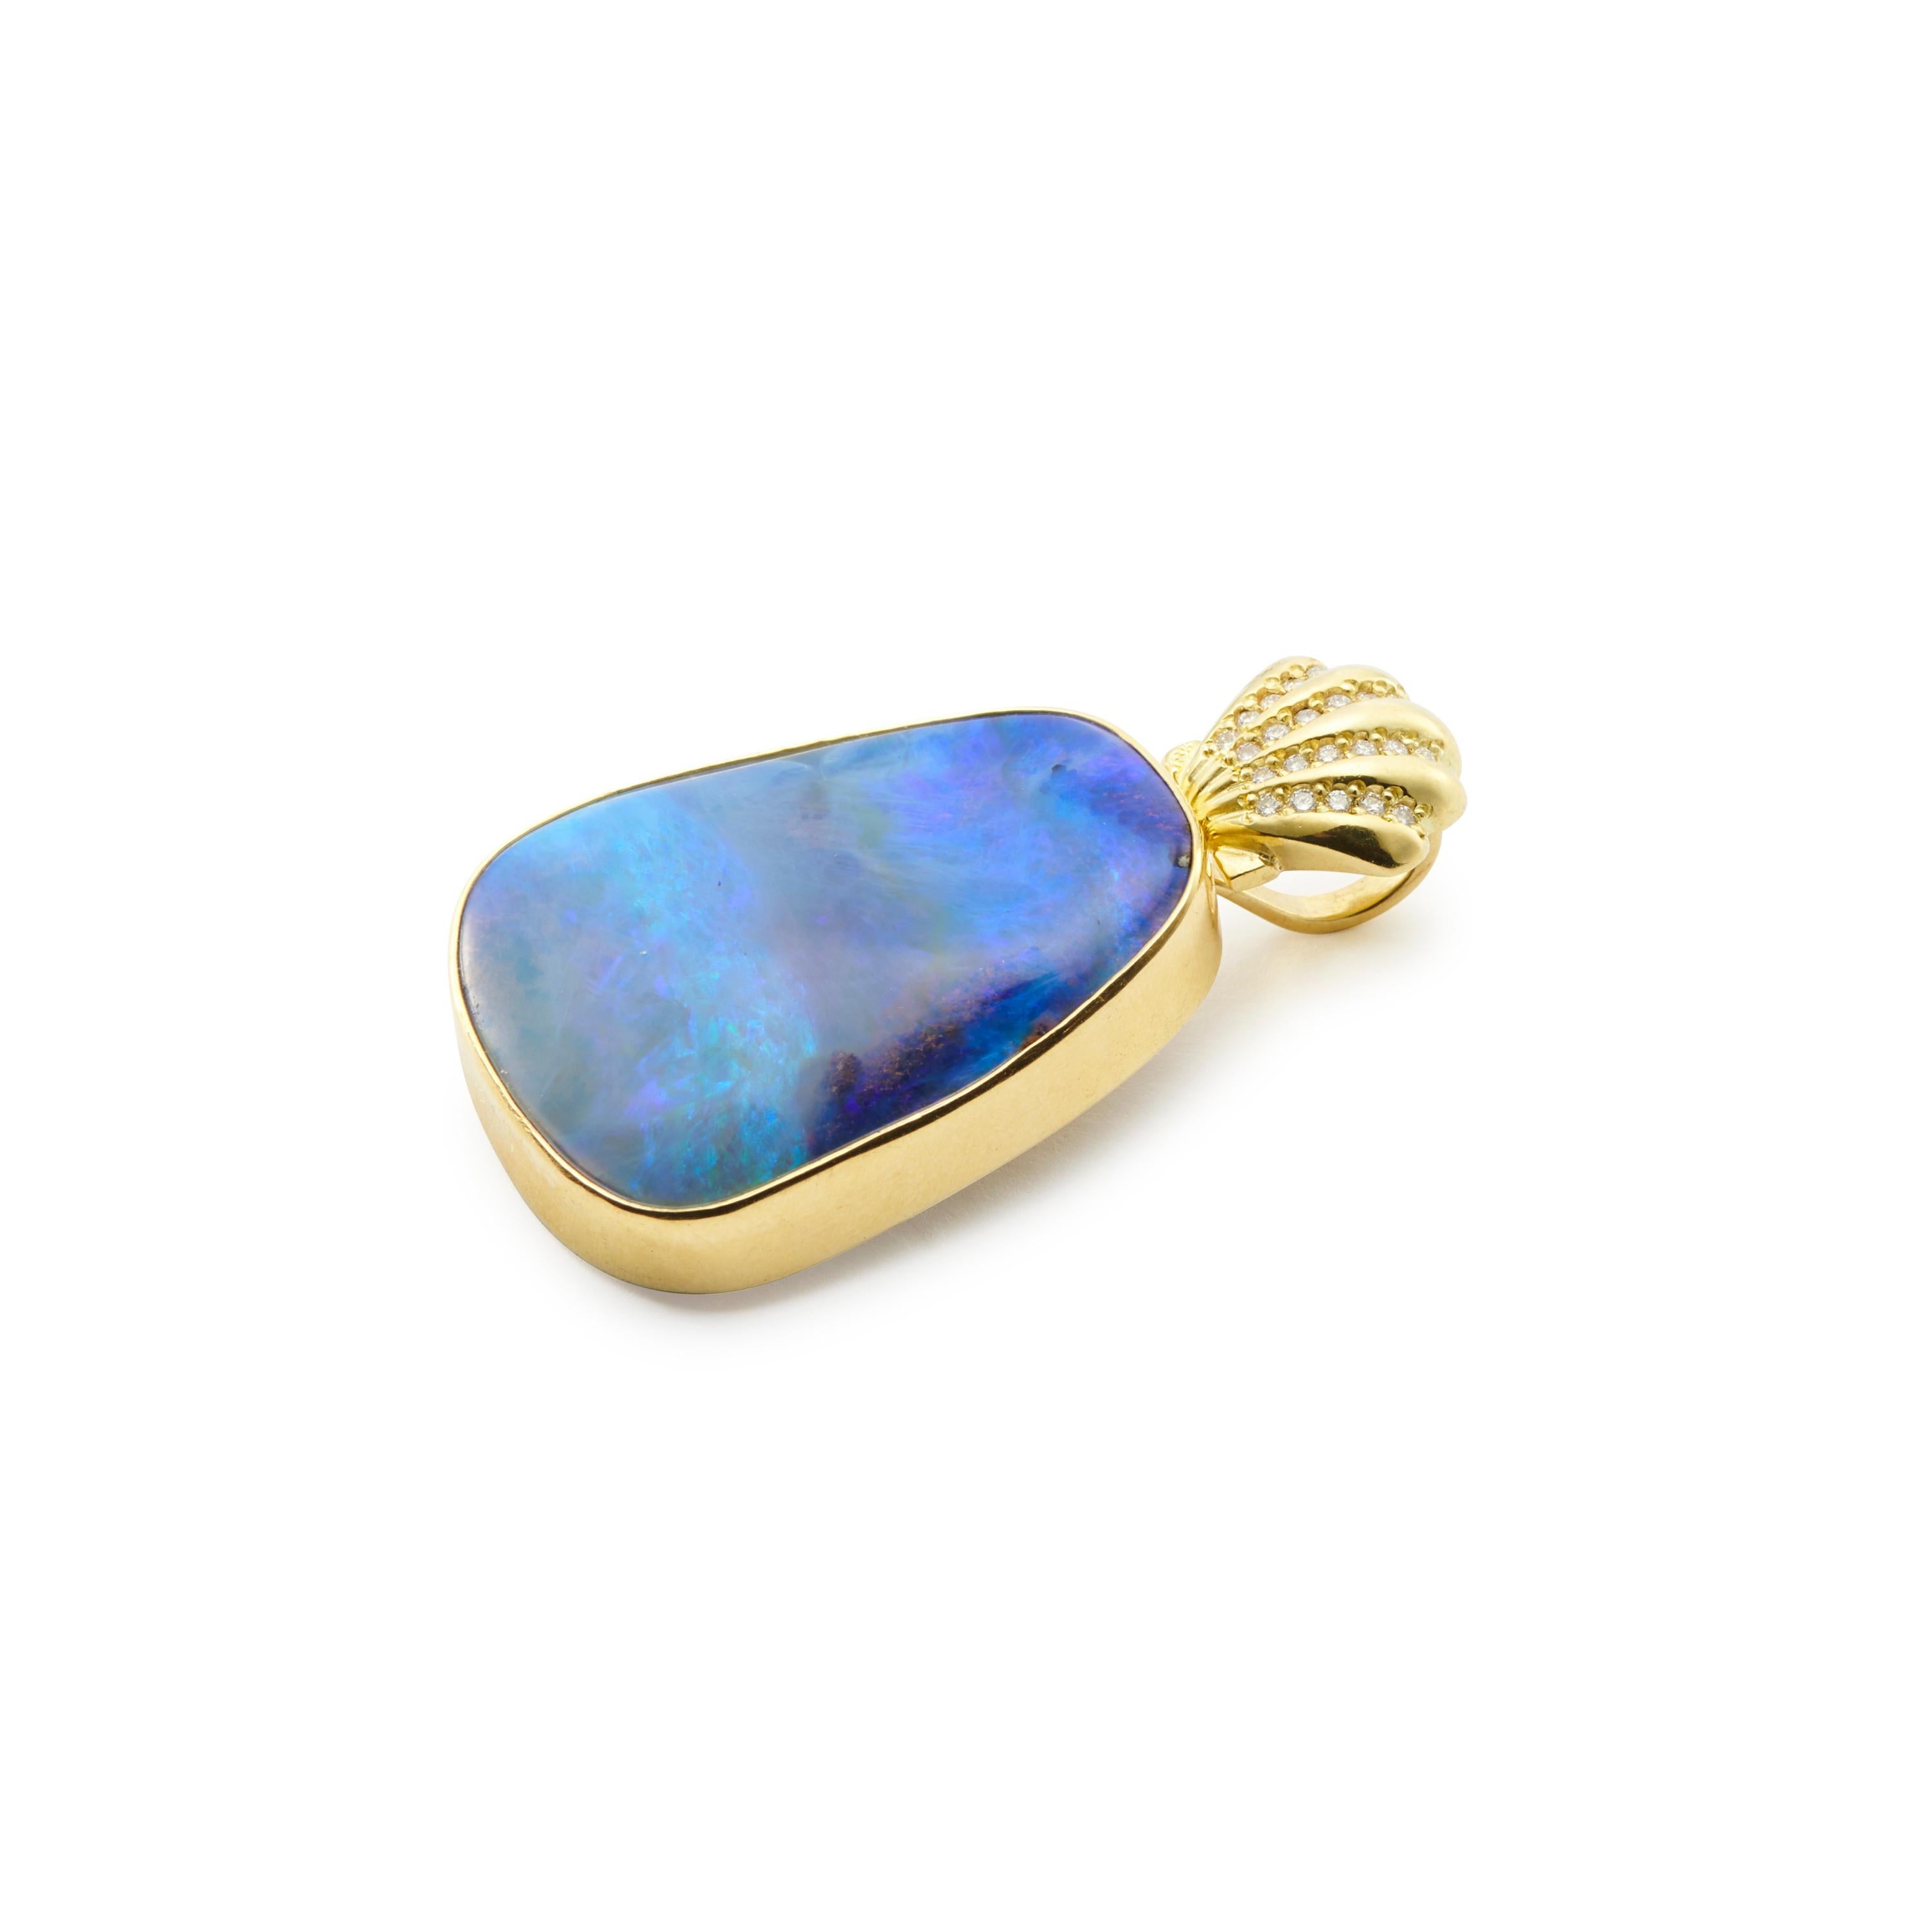 boulder opal pendant blue nile